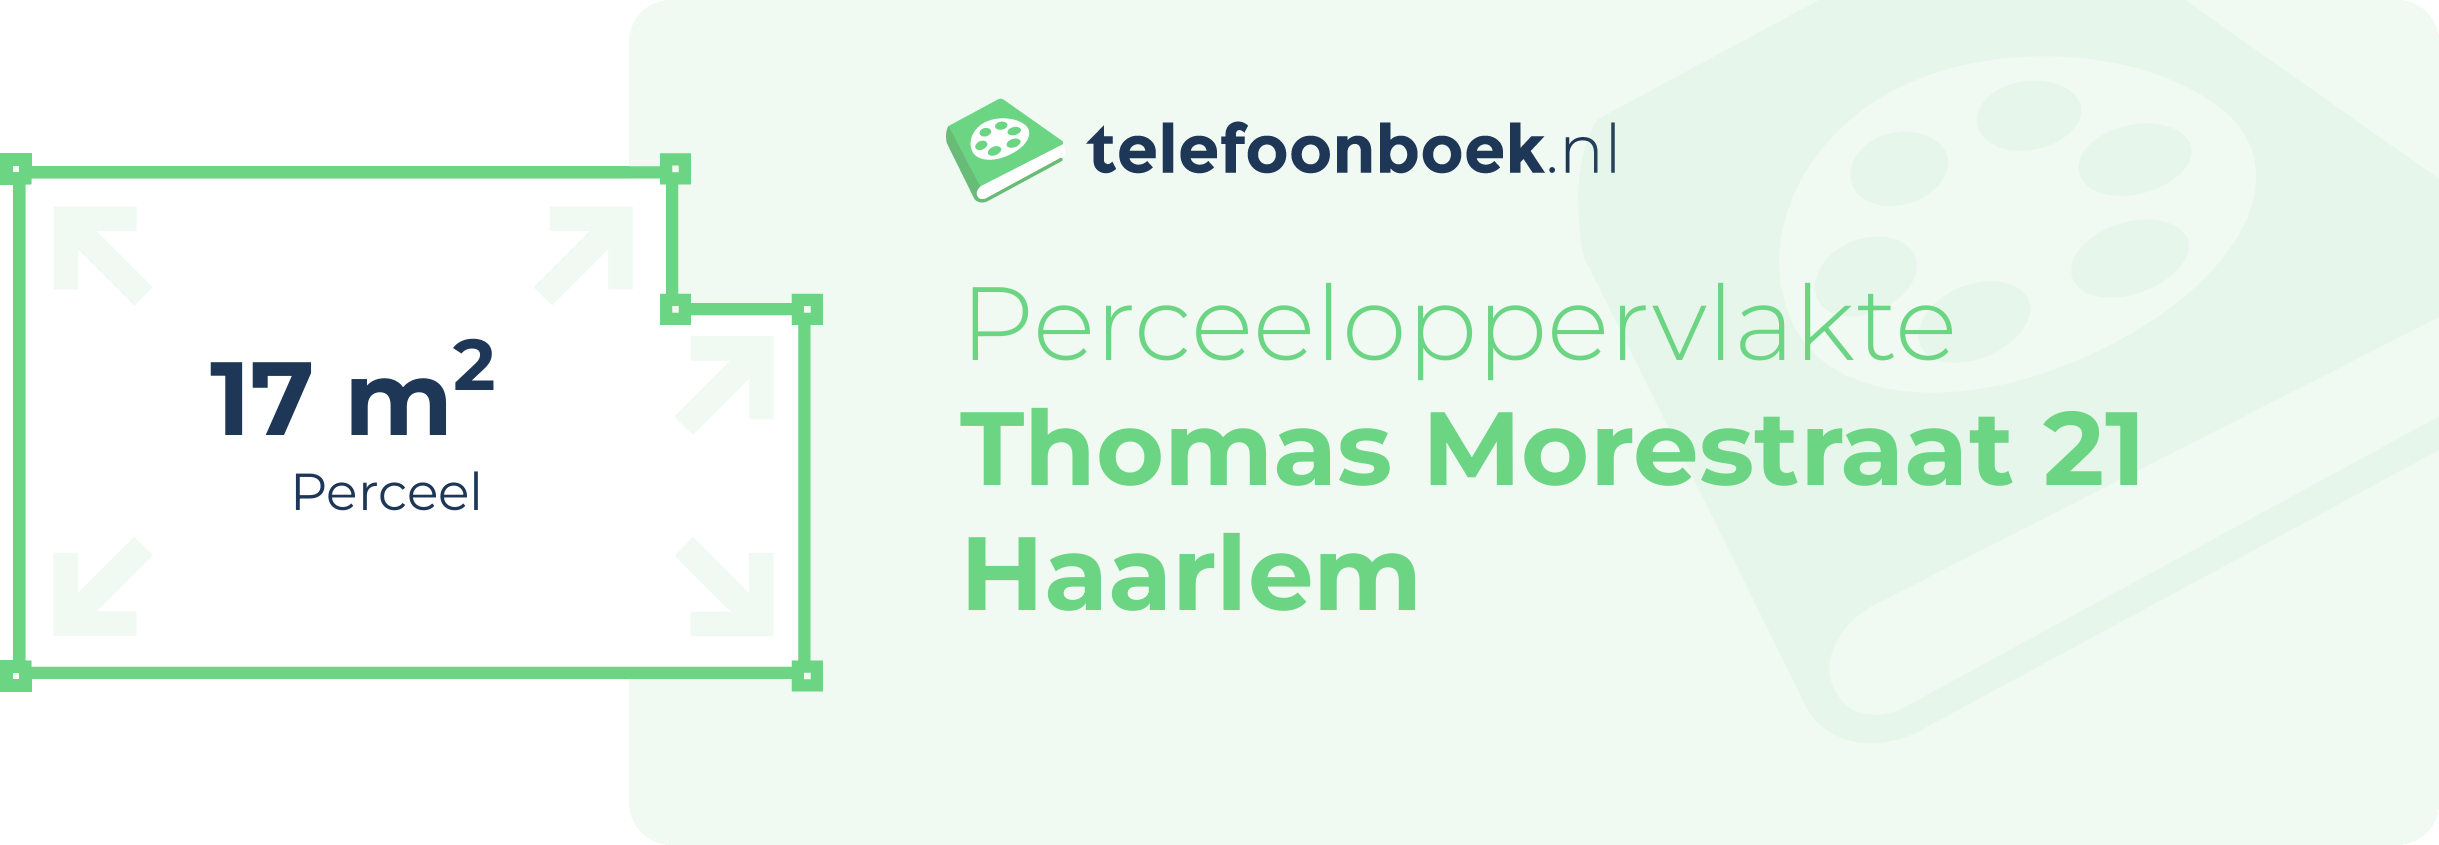 Perceeloppervlakte Thomas Morestraat 21 Haarlem